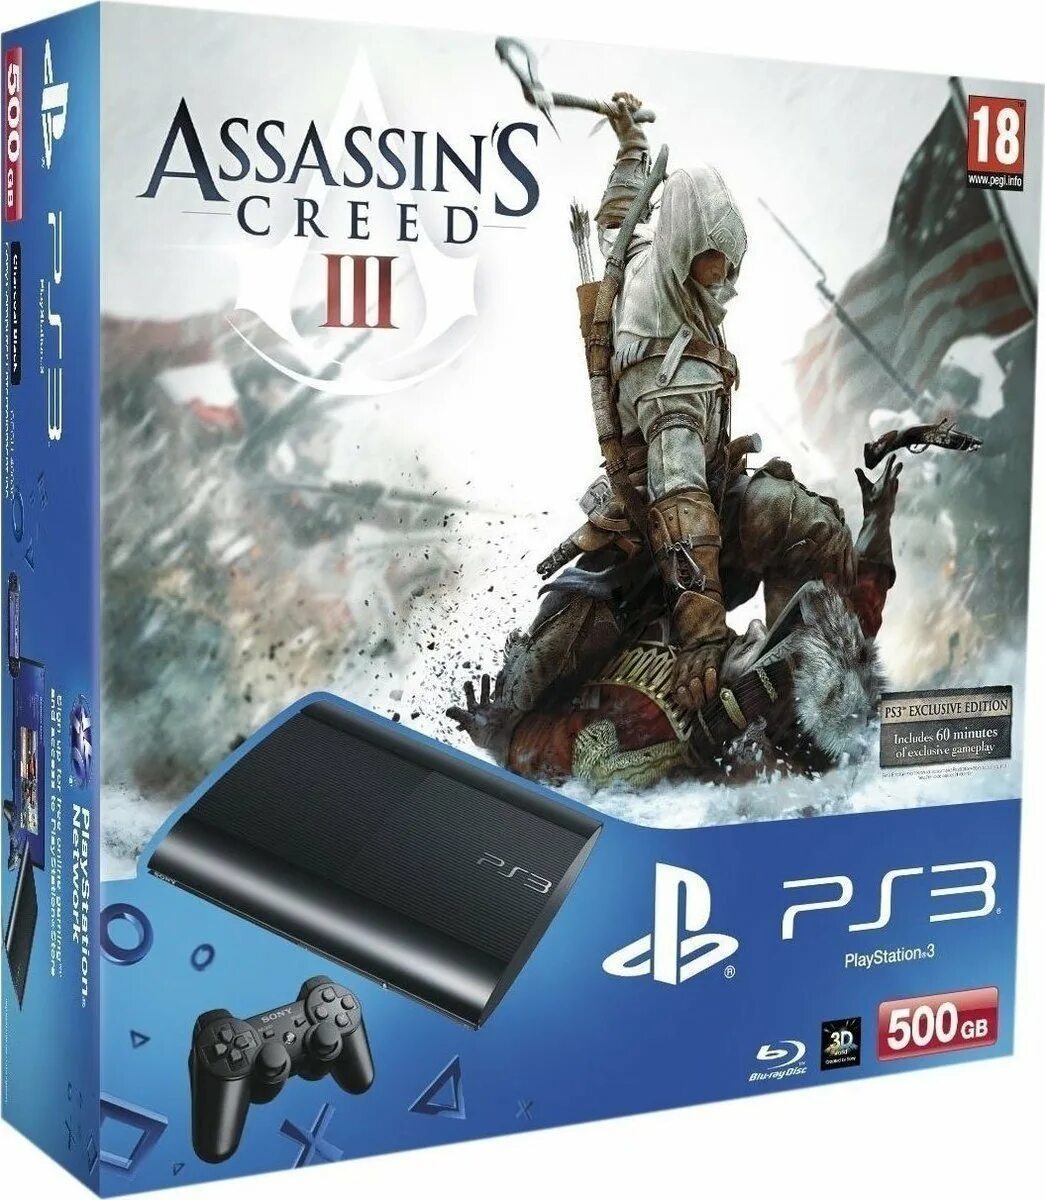 Игровая приставка Sony PLAYSTATION 3 super Slim 500 ГБ. Assassins Creed 1 ps3. Ассасин Крид на ПС 3. Sony PLAYSTATION 3 игры. Сайты ps3